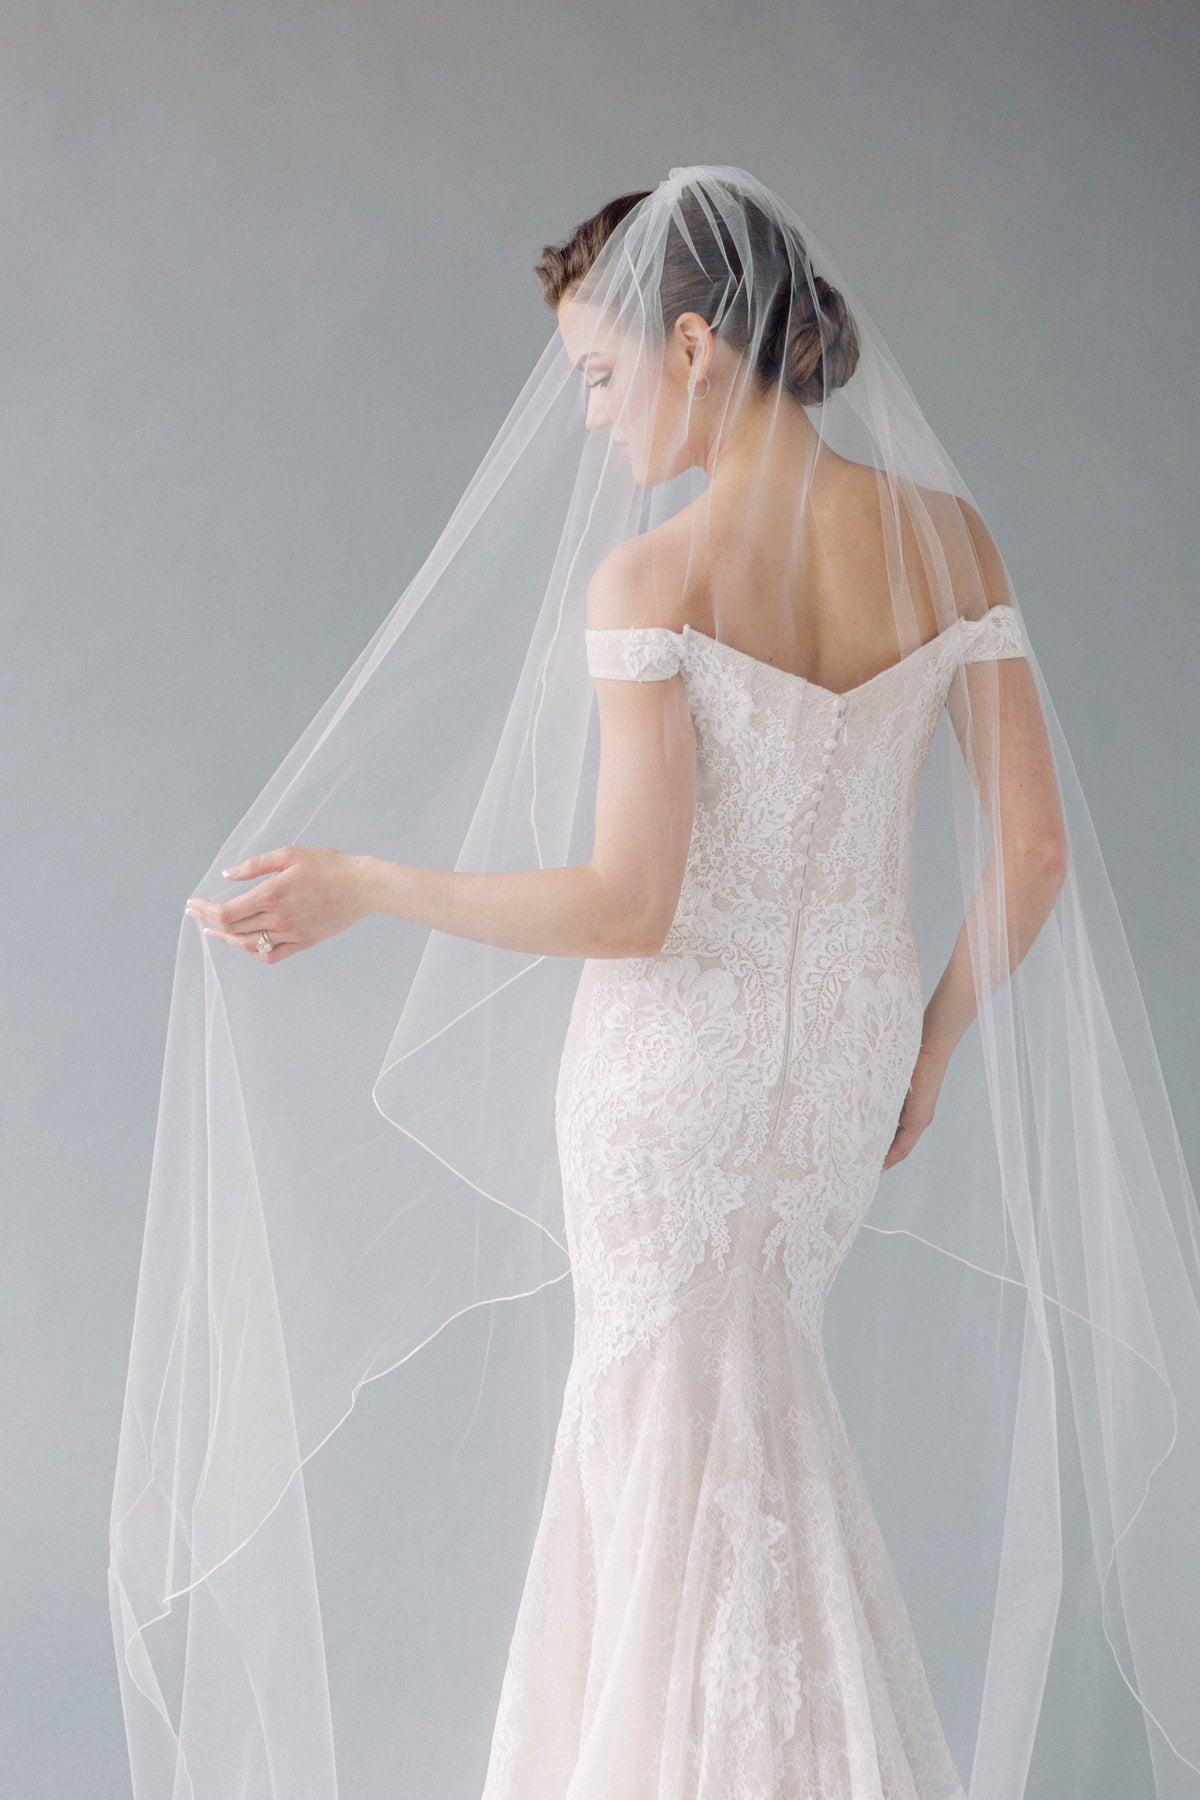 Bridal Veils Simple Satin Edge Tulle Chapel Train Wedding Veil Long Classic Design